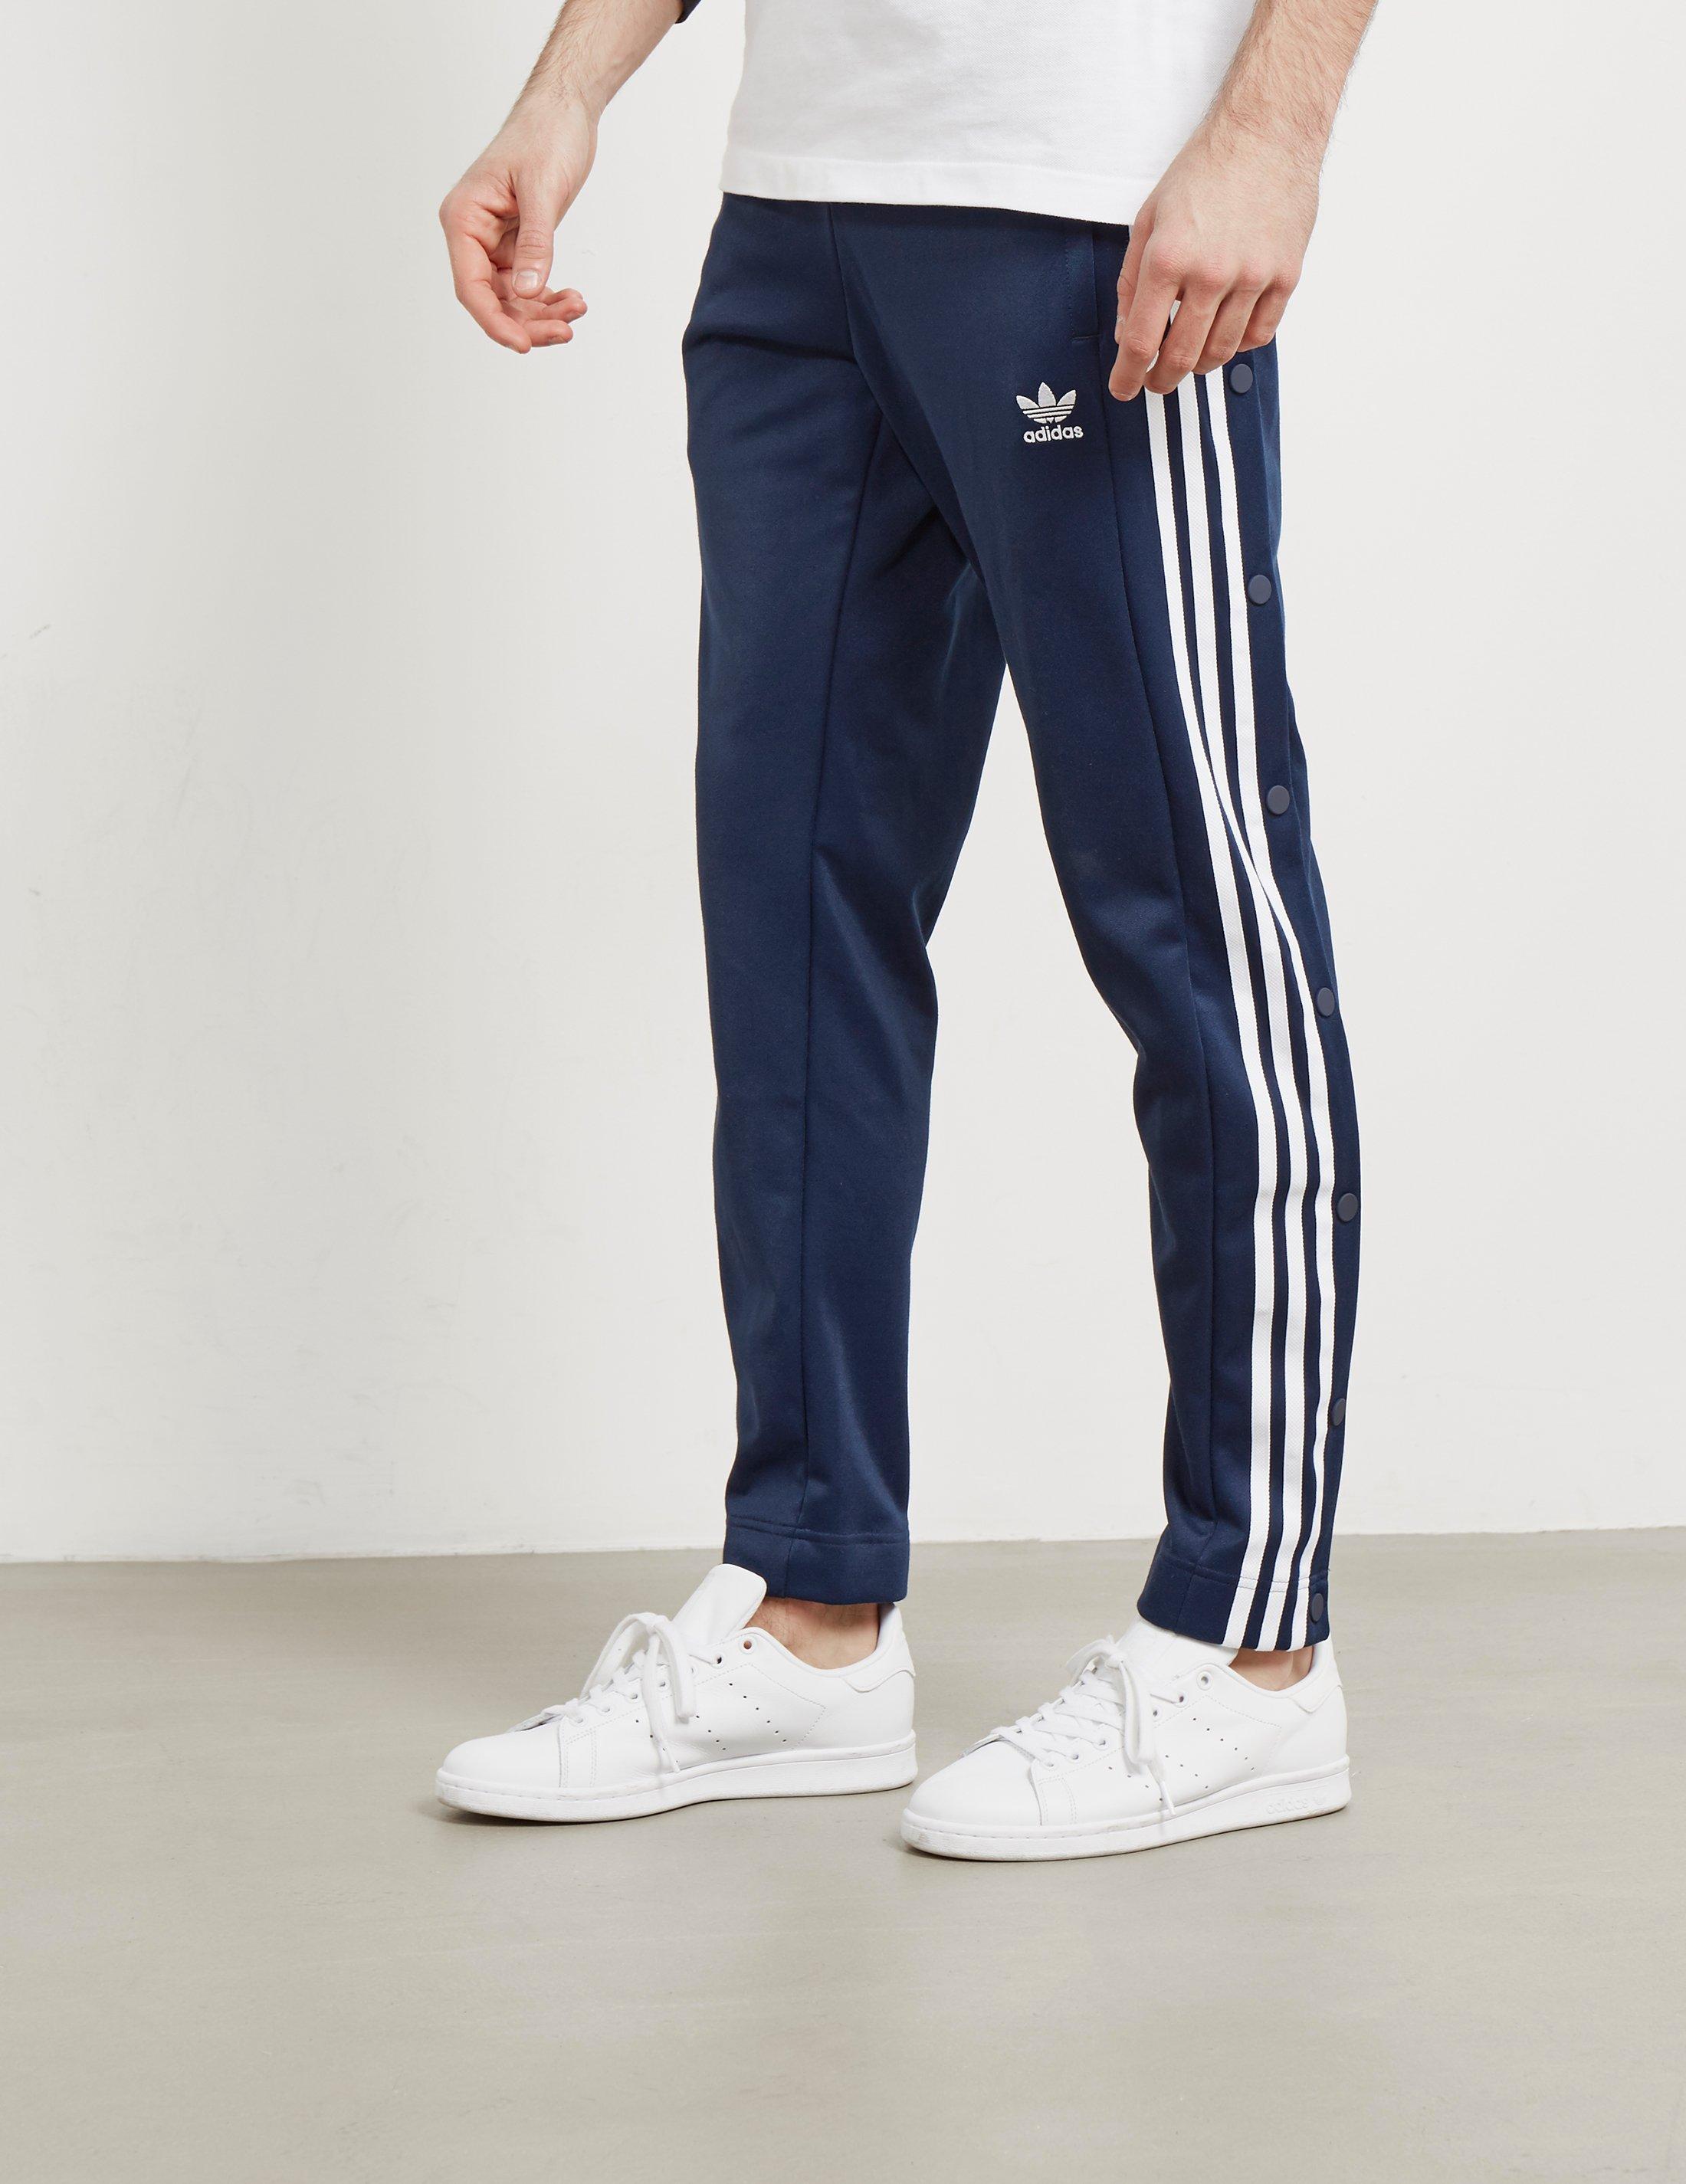 Lyst - Adidas Originals Mens Adibreak Snap Track Pants Navy Blue in